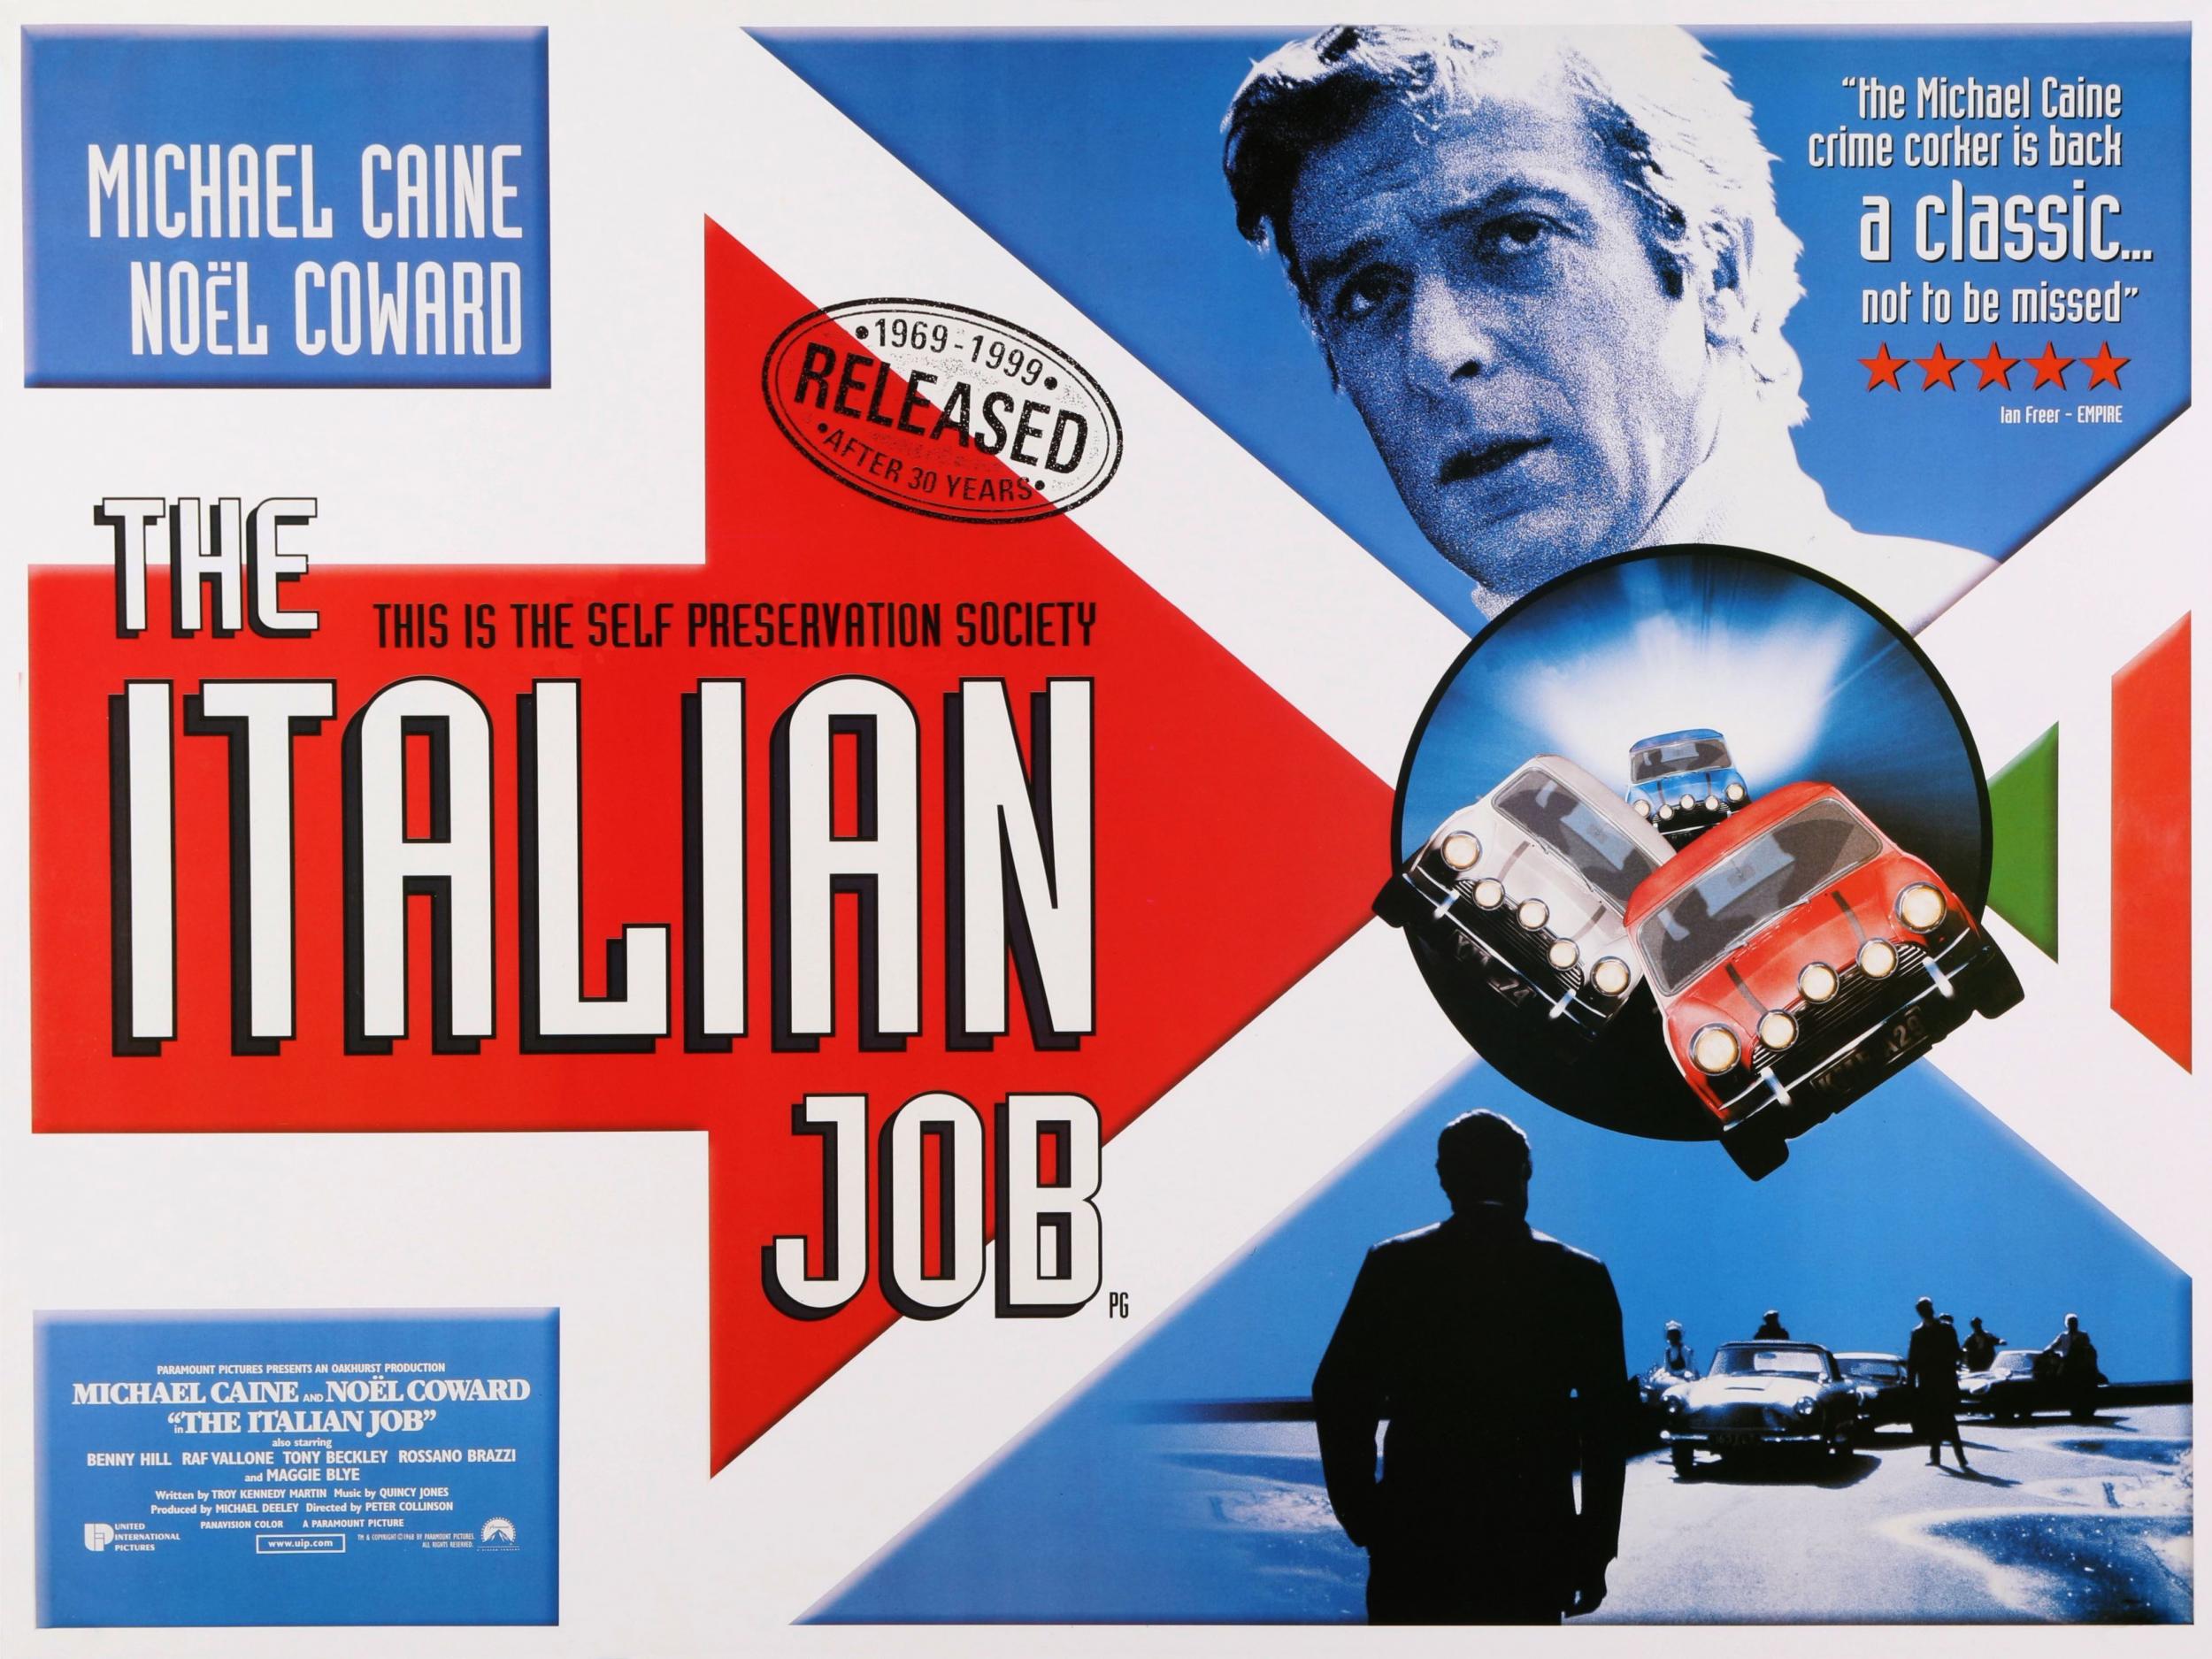 Caine starred in 'The Italian Job' in 1969